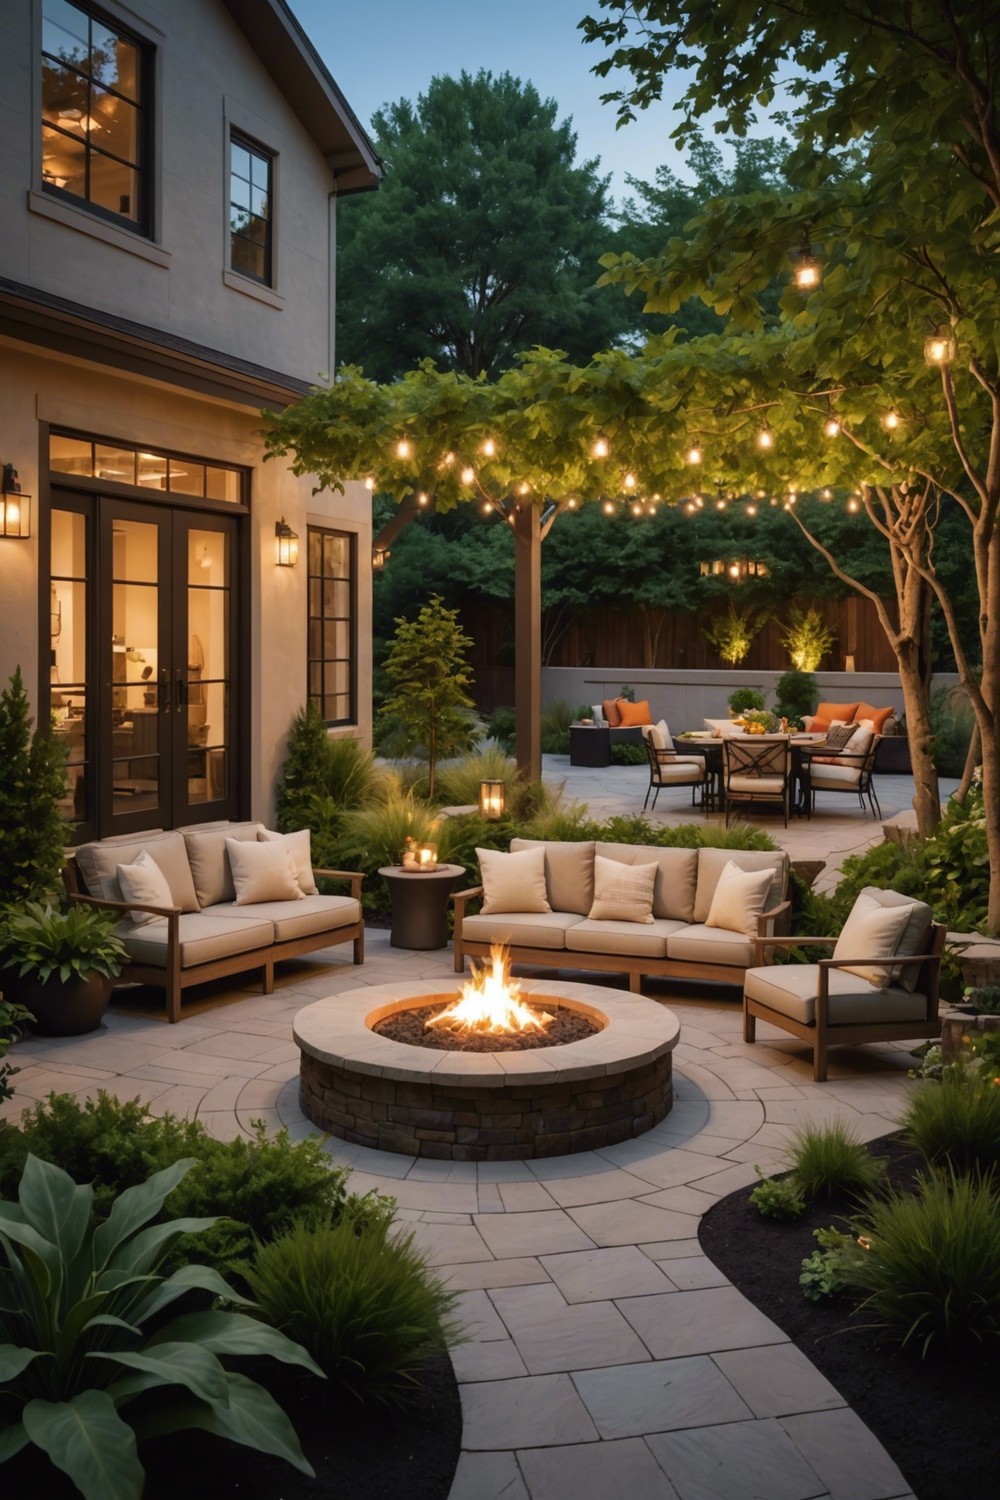 Courtyard Oasis Fireplace: